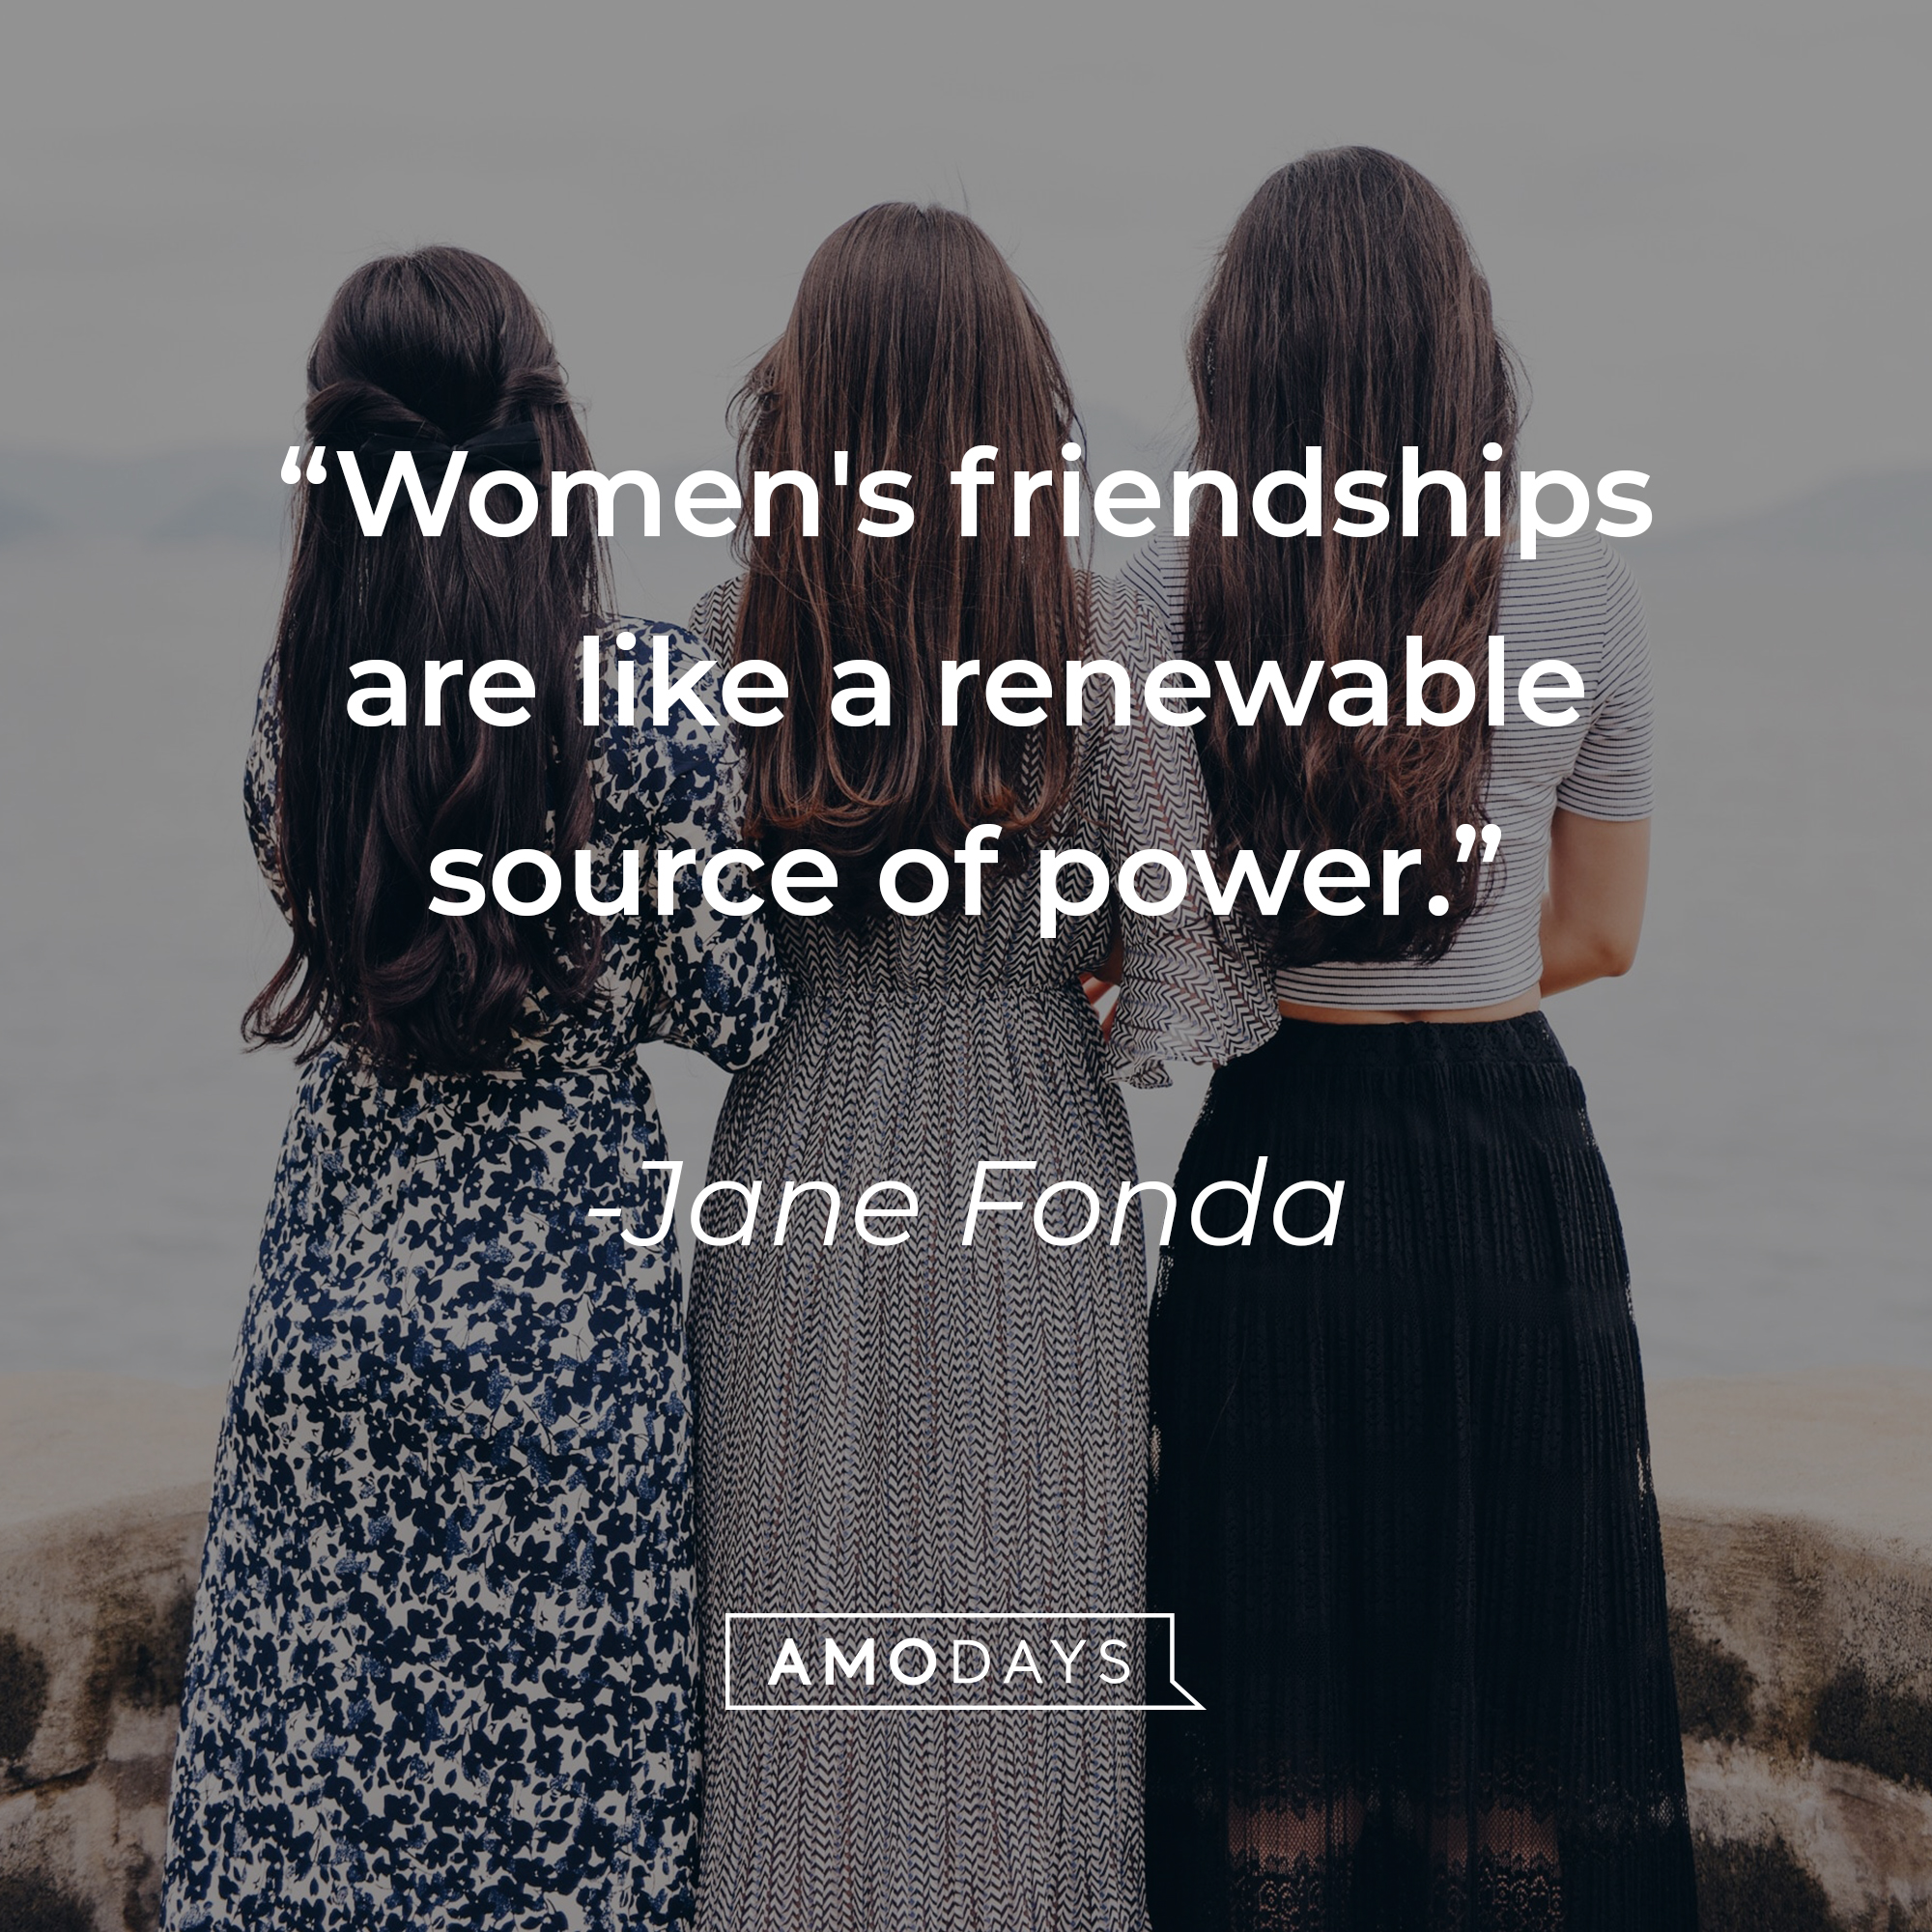 Jane Fonda's quote: "Women's friendships are like a renewable source of power." | Source: Unsplash